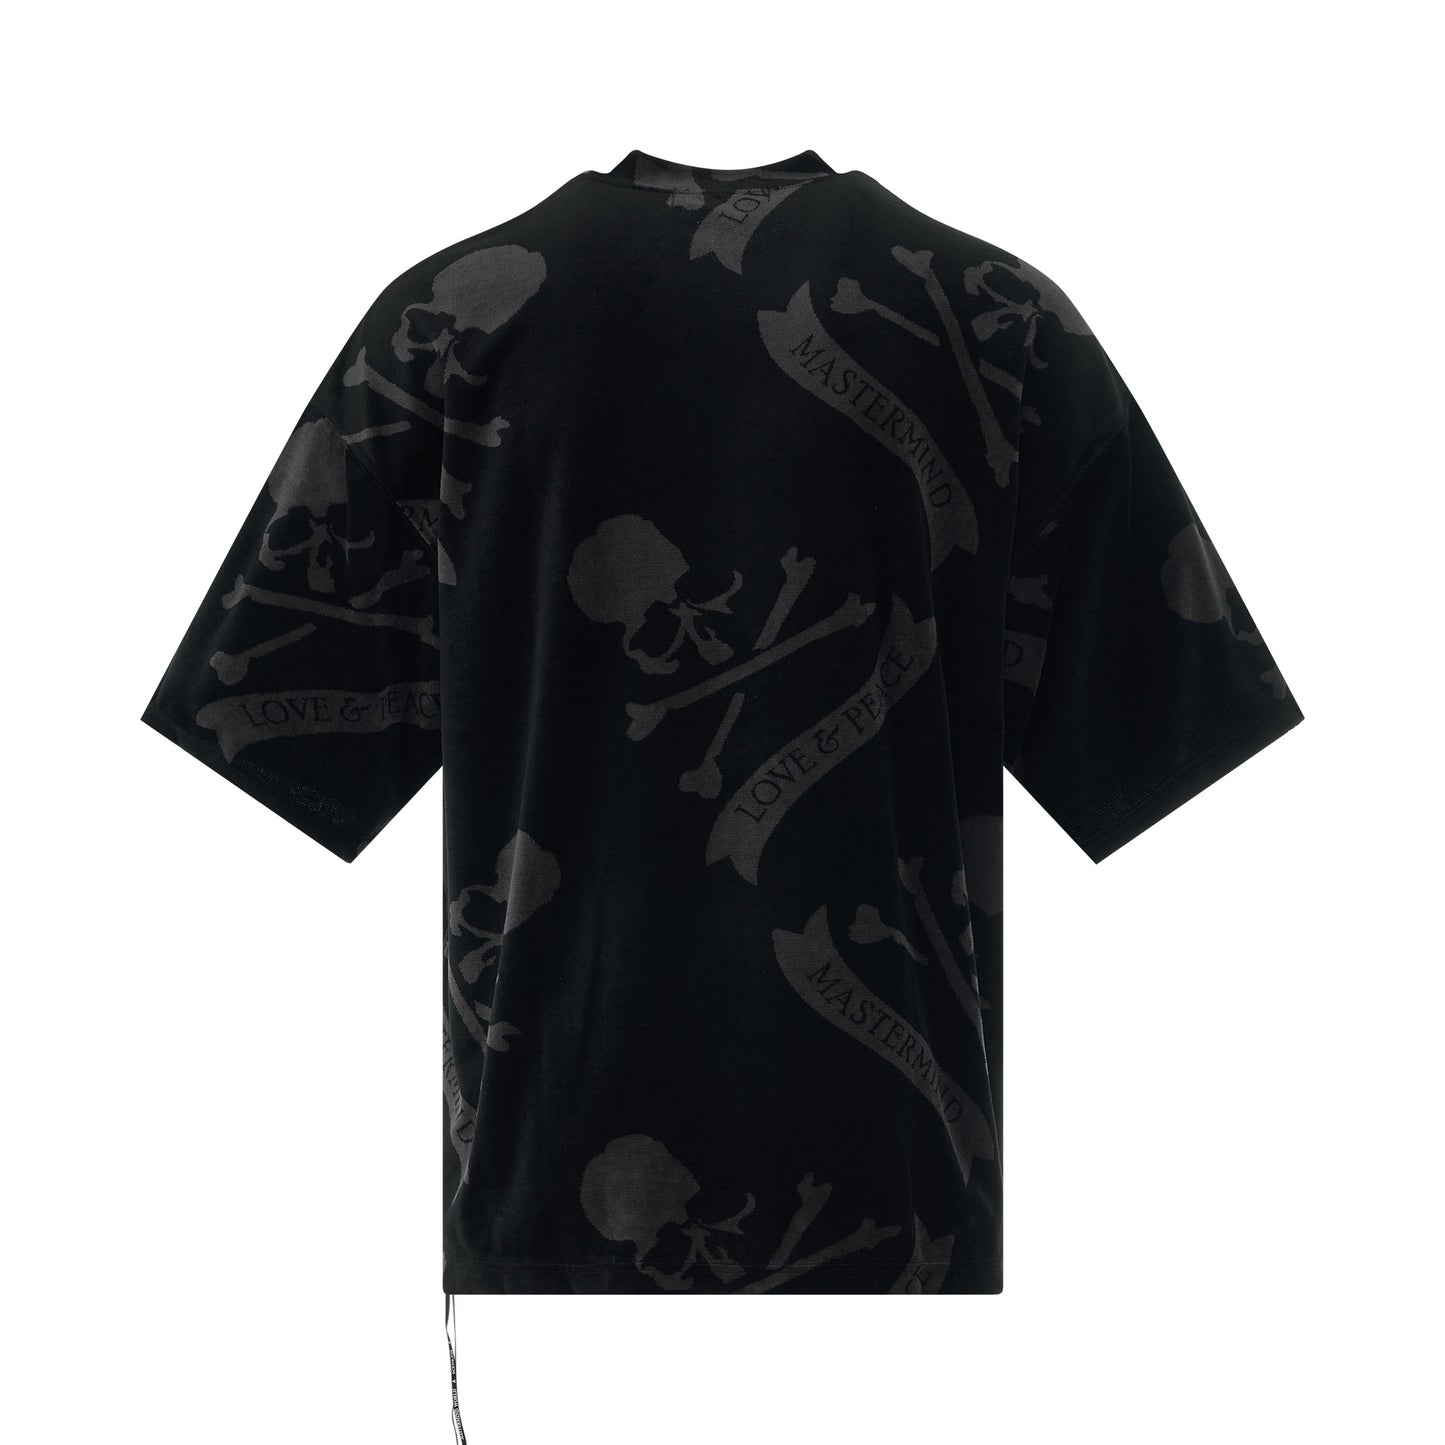 All-Over Skull Velour Boxy Fit T-Shirt in Black